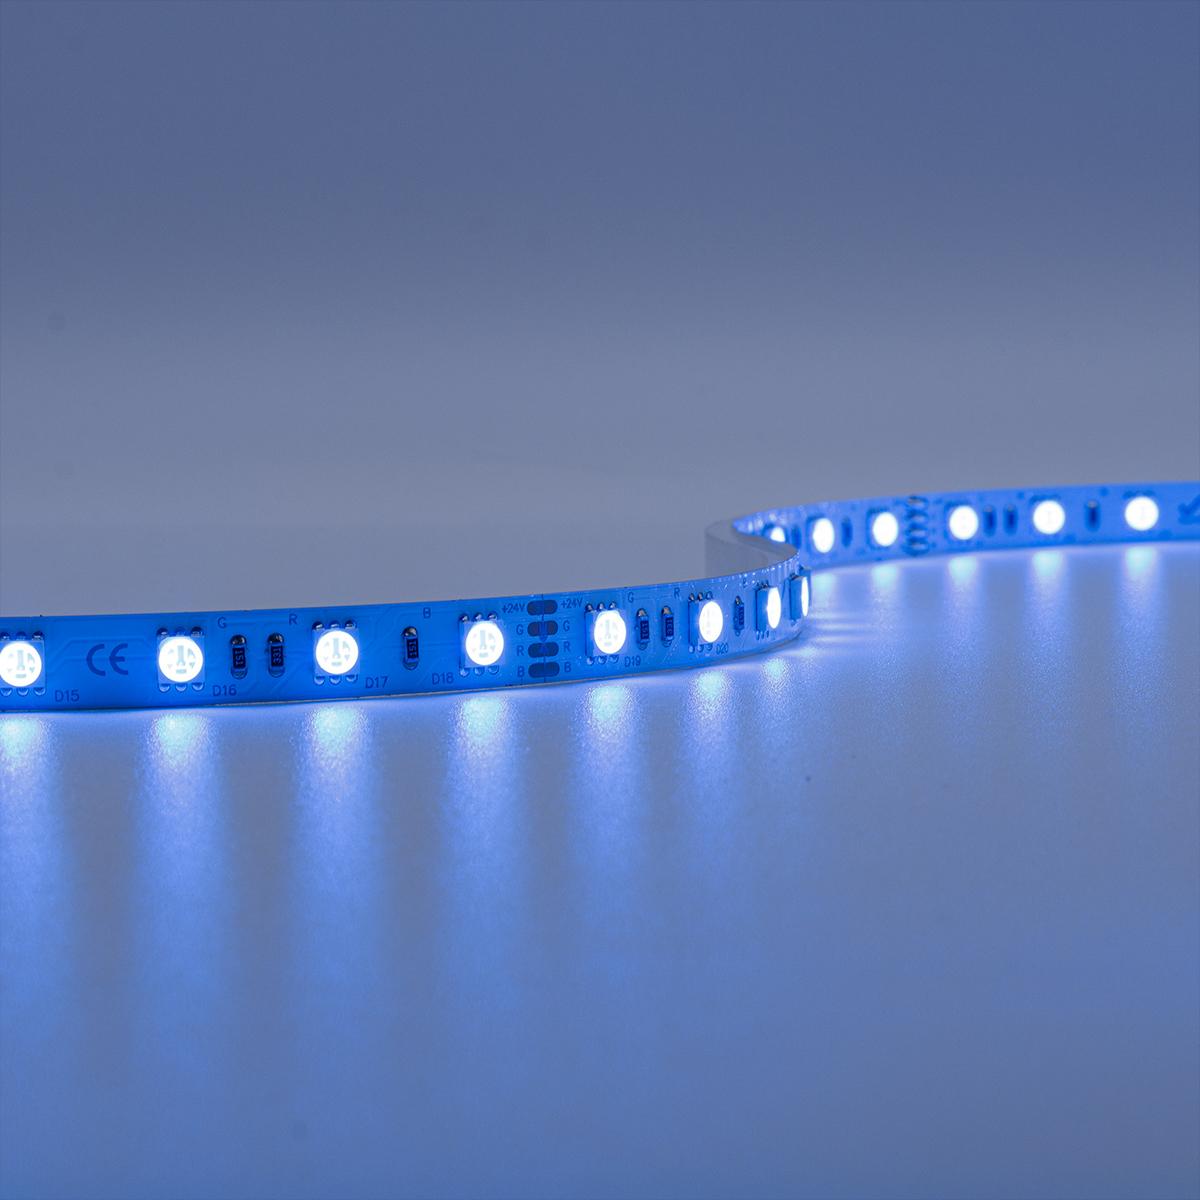 Strip 24V LED Streifen 5M 14,4W/m 60LED/m 10mm Farbwechsel - Lichtfarbe: RGB - Schutzart: IP20